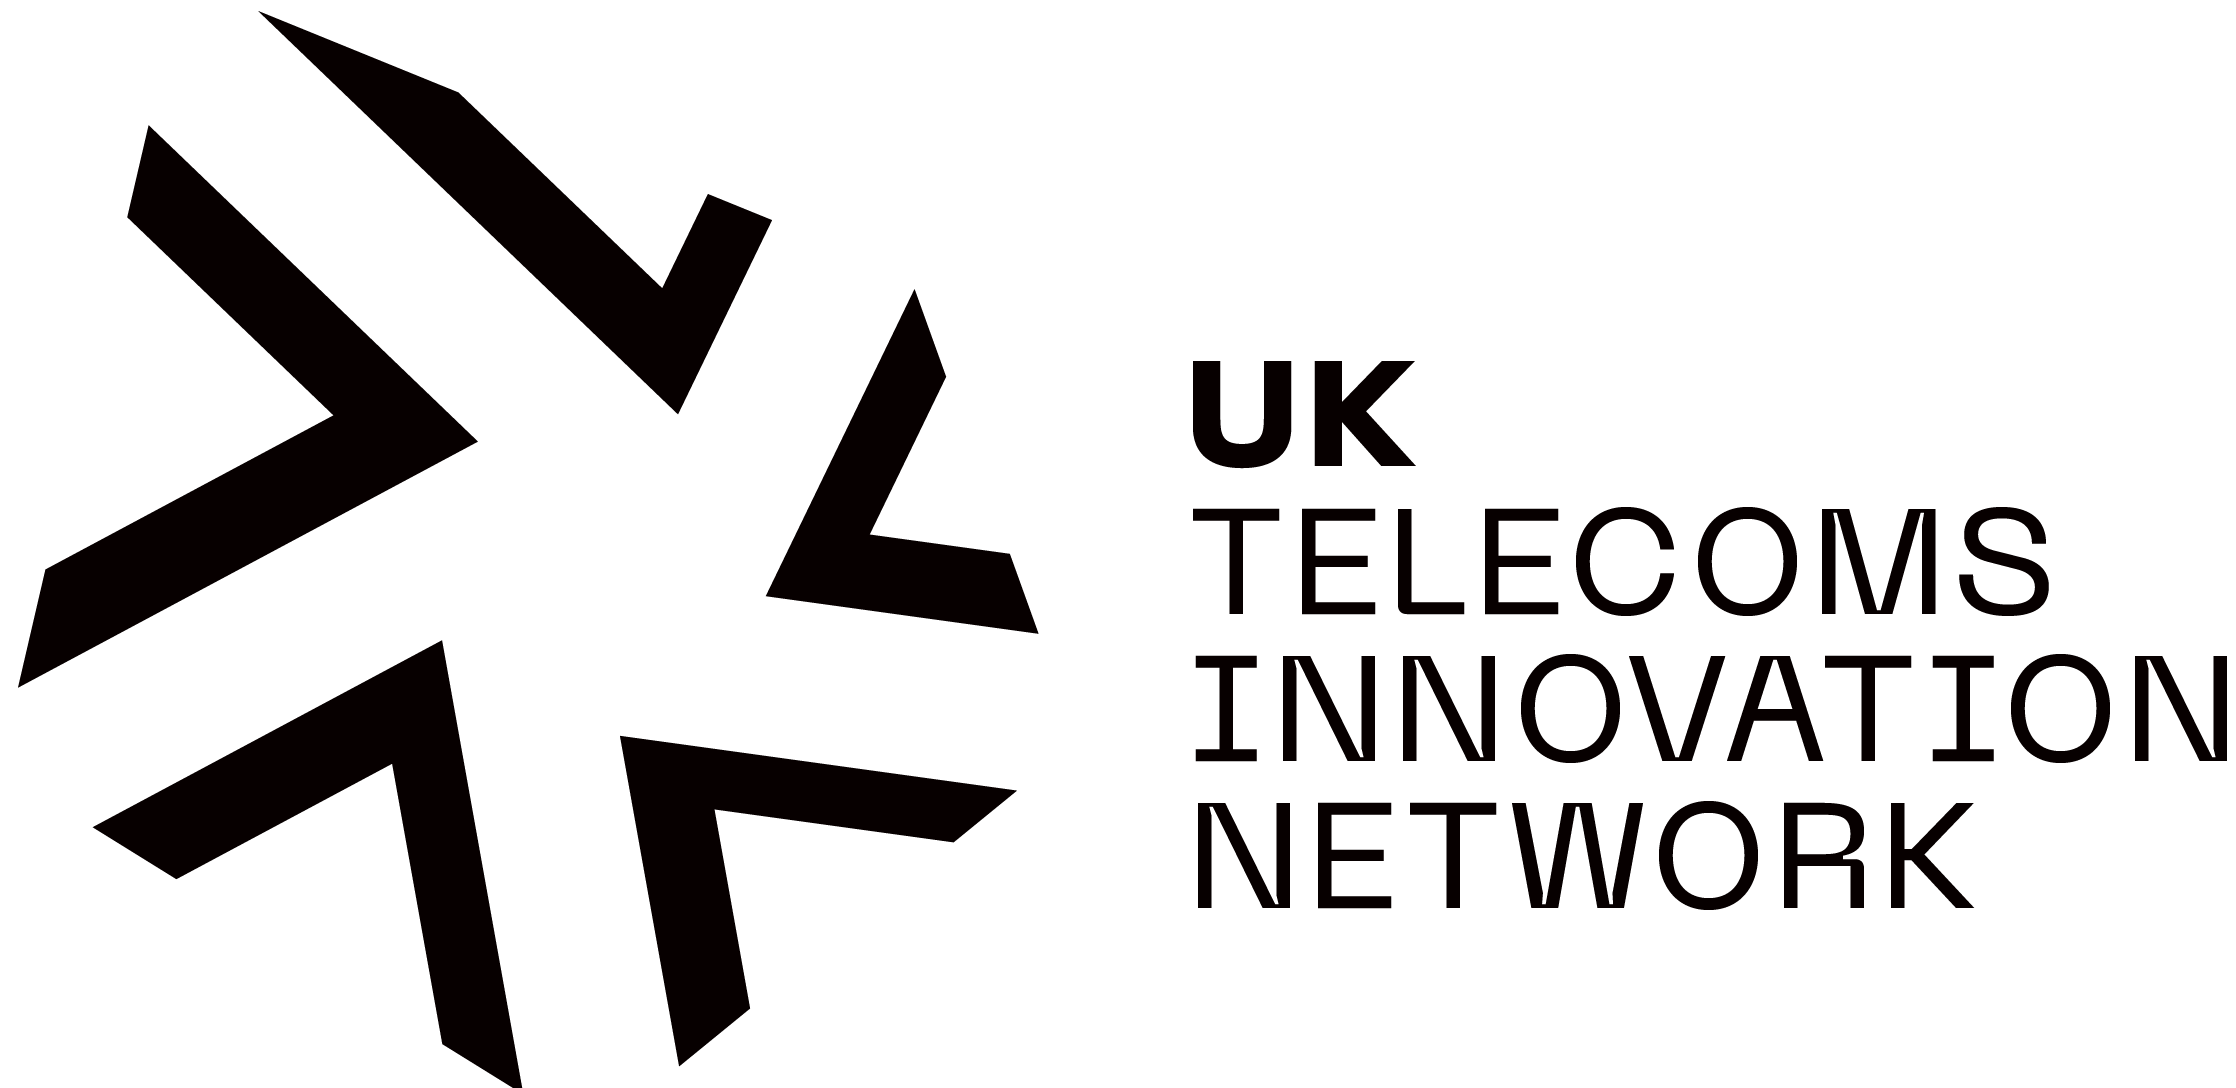 UK telecoms innovation network logo